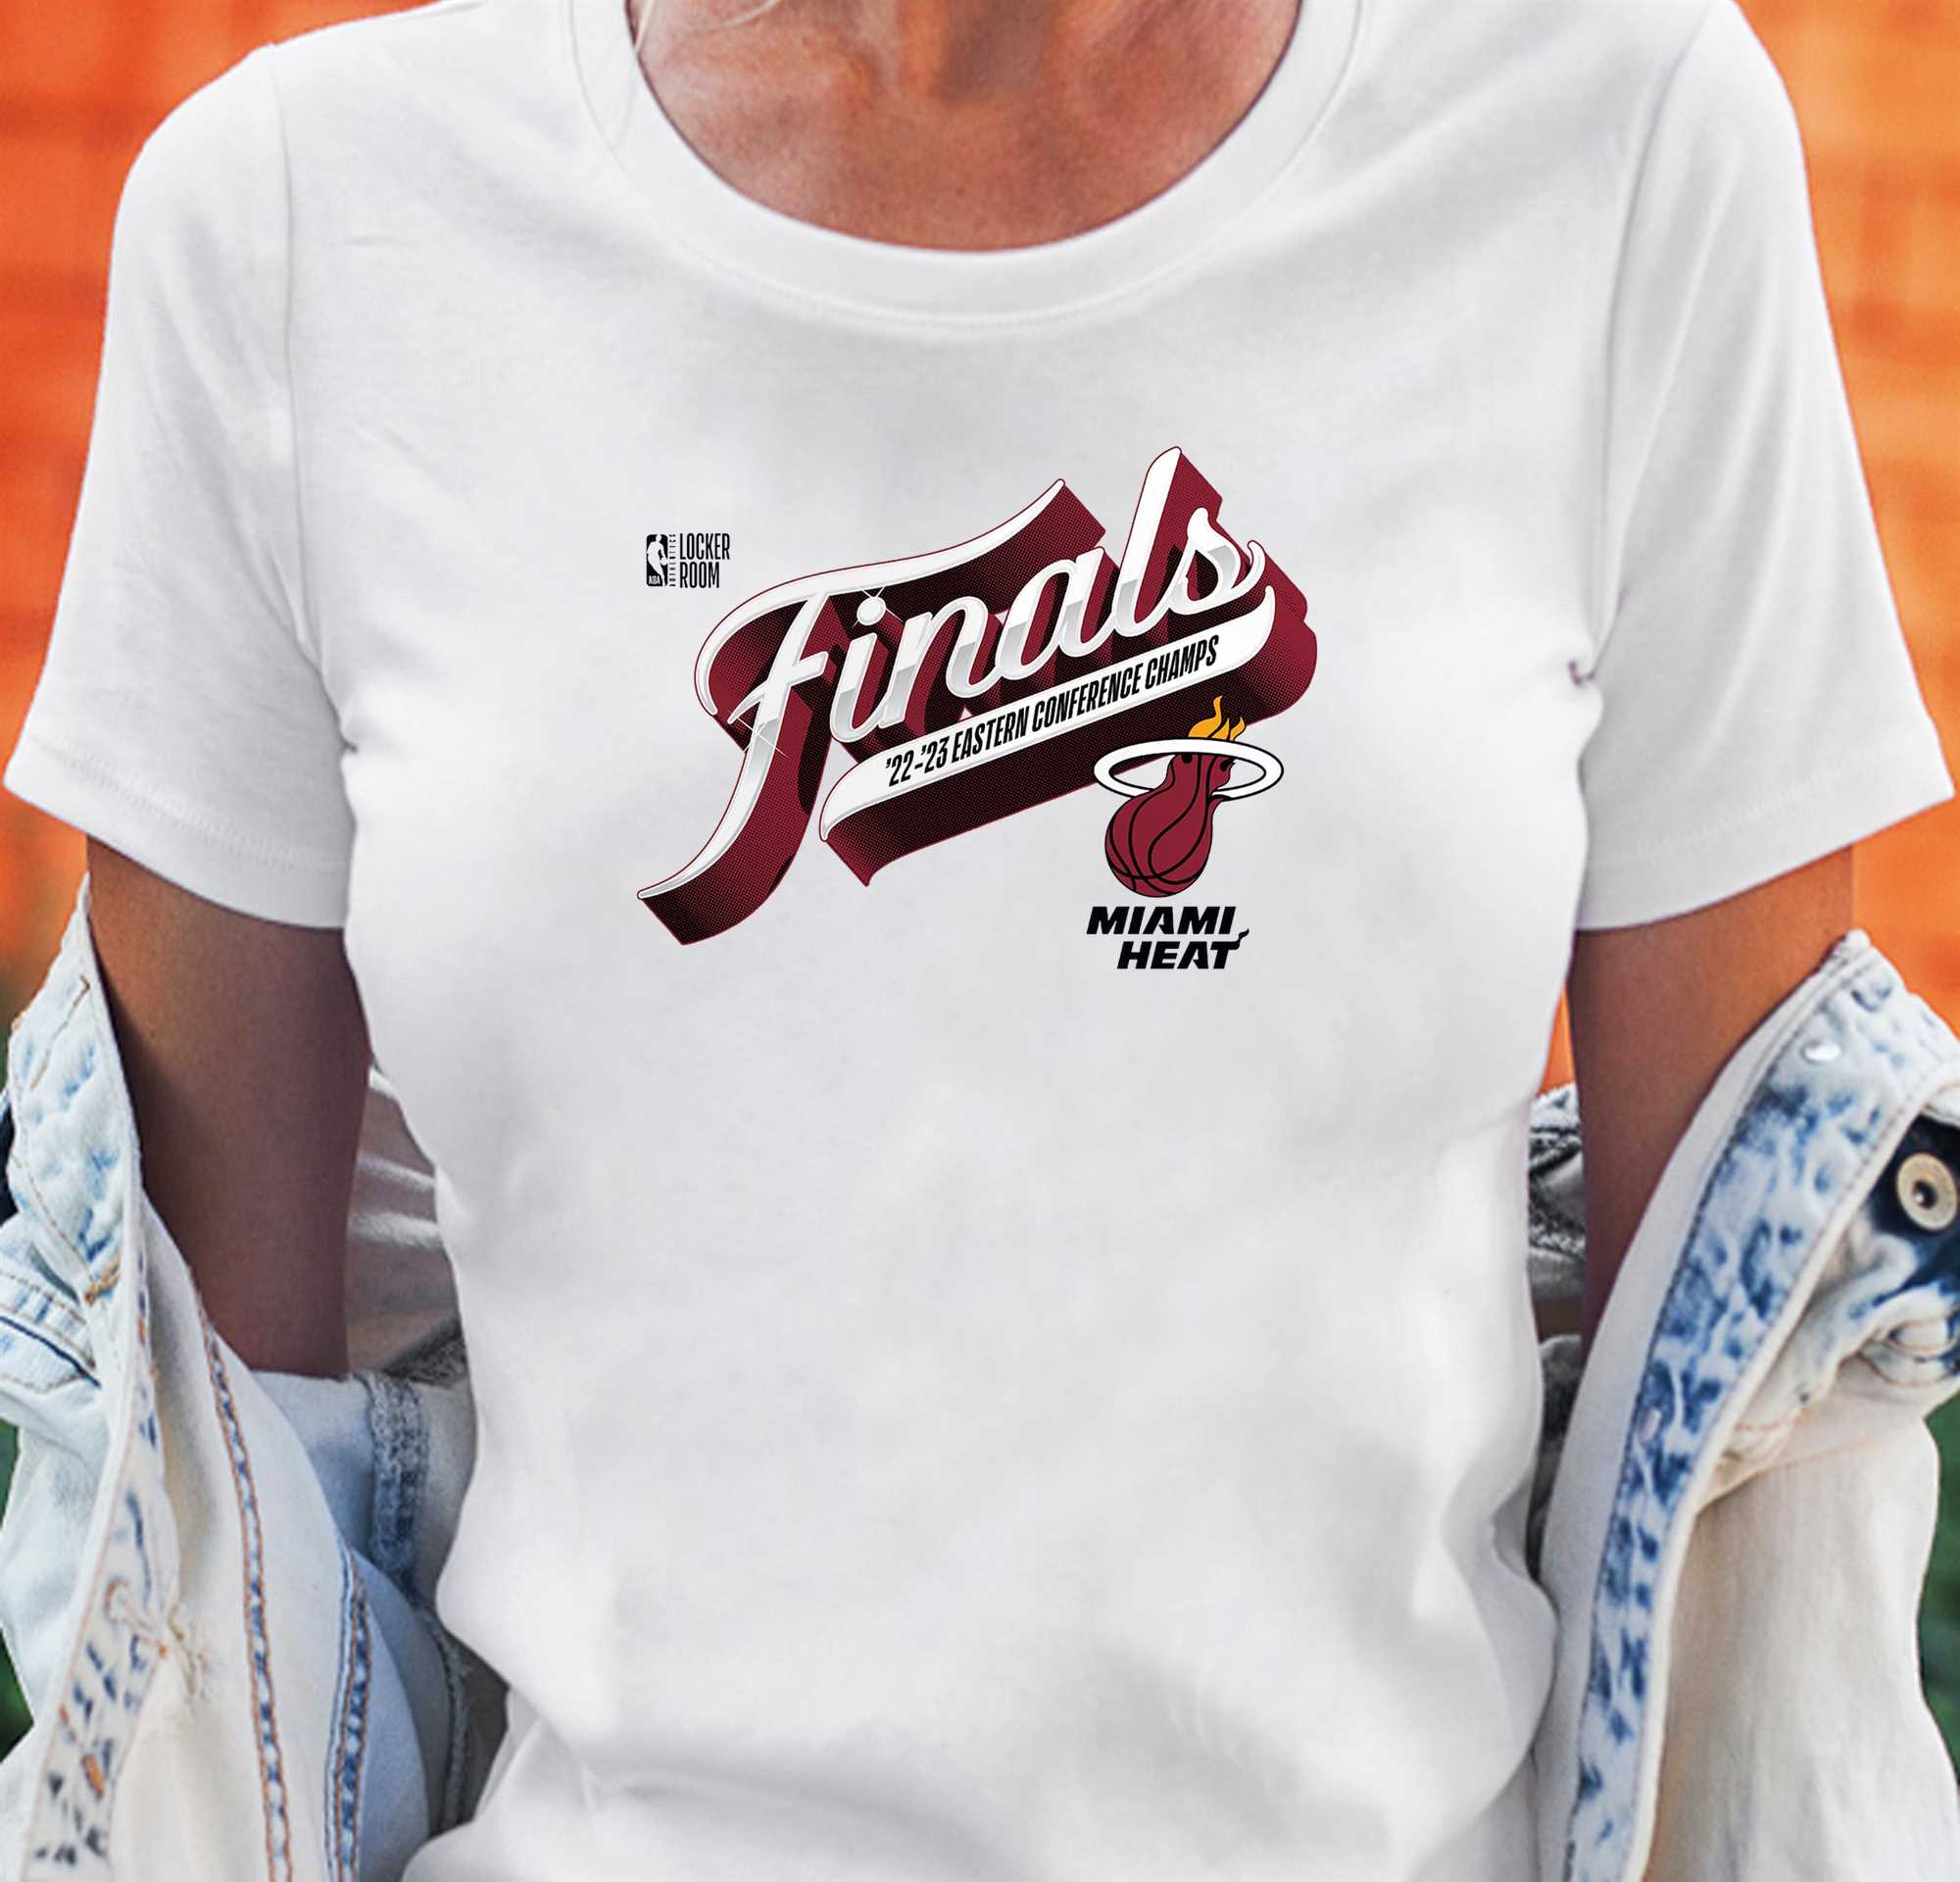 2022 2023 Eastern Conference Champions Miami Heat NBA Retro Shirt